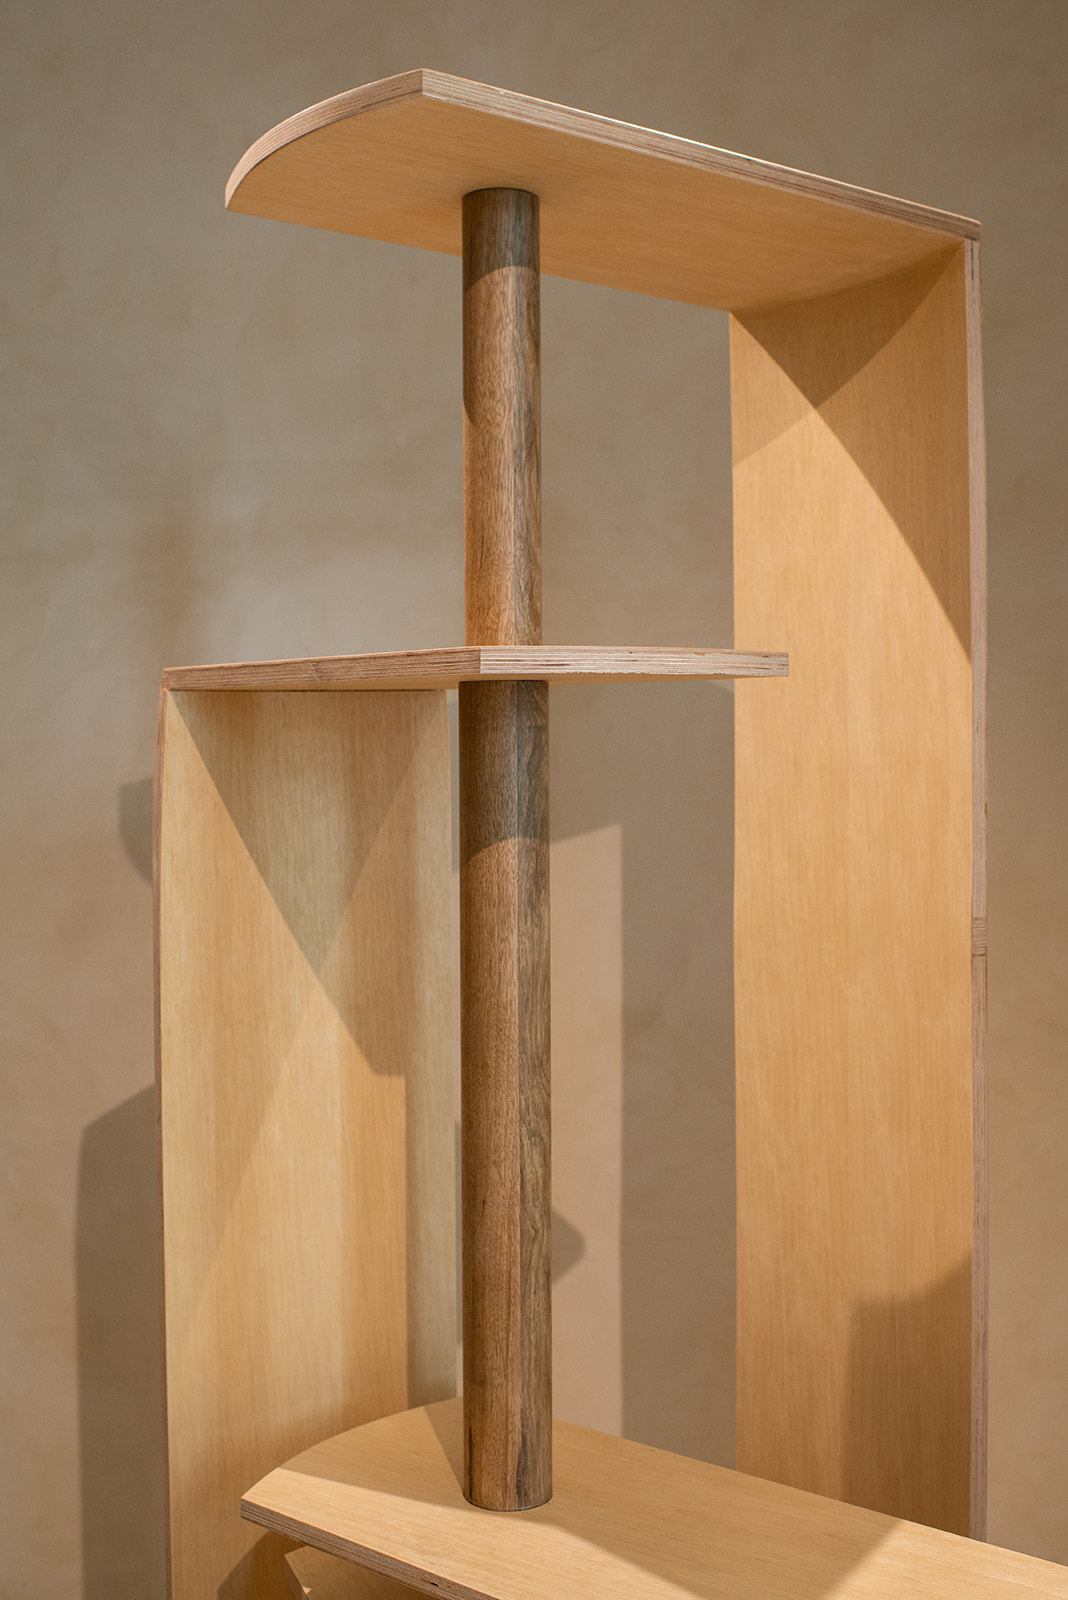 Adam Elezrah, Who Took the Pole, detail, 2022, walnut wood, plywood, and walnut veneer<br />
Photography: Neta Cones